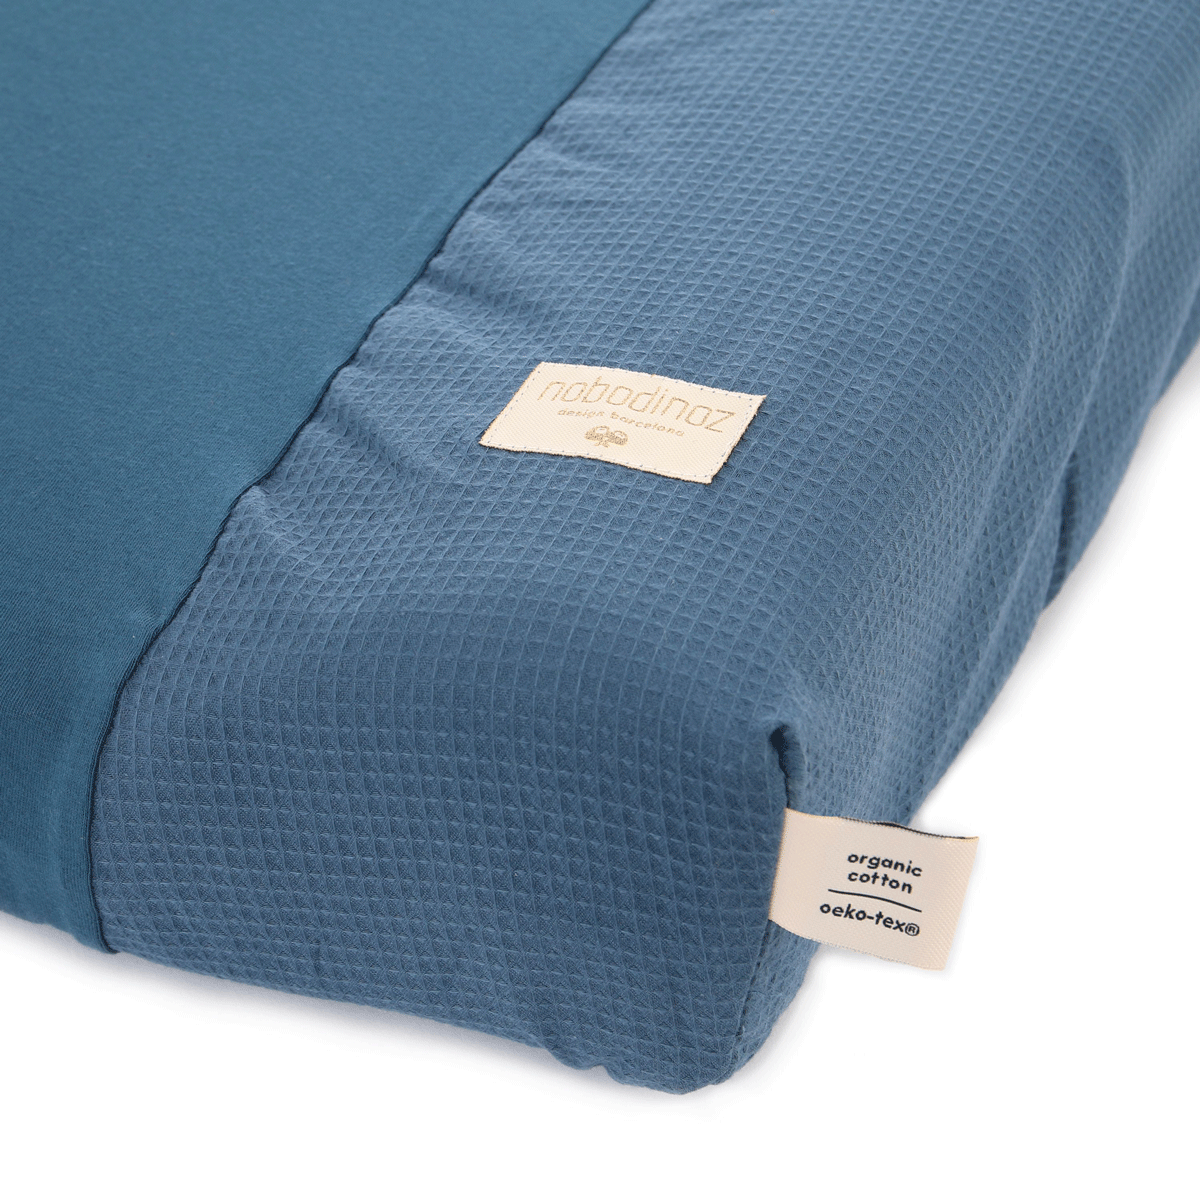 Calma waterproof changing mat • honeycomb night blue